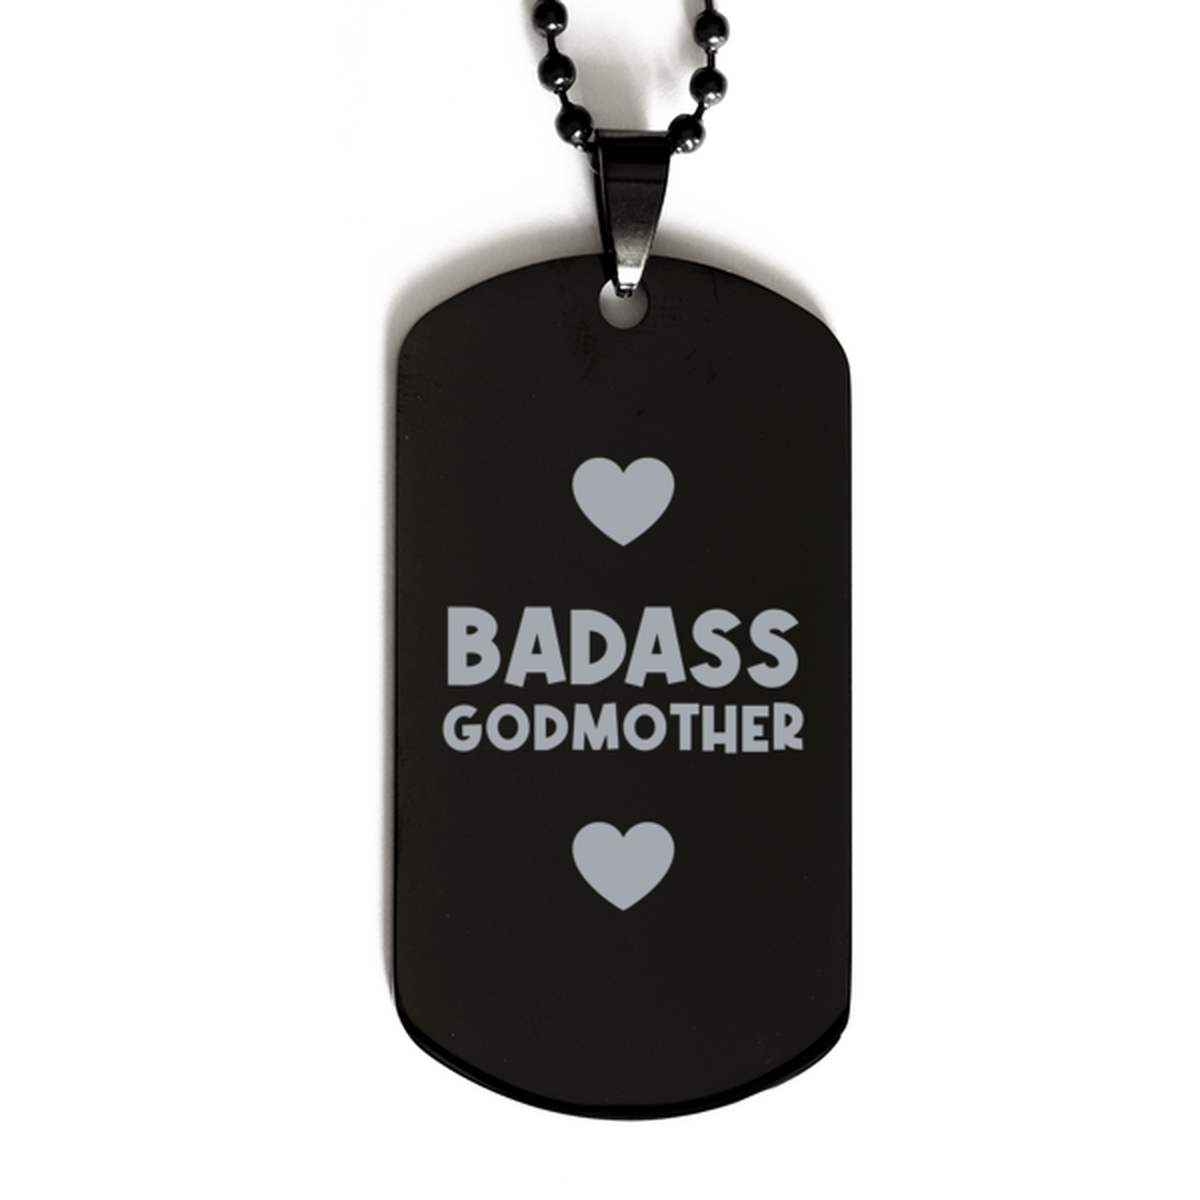 Godmother Black Dog Tag, Badass Godmother, Funny Family Gifts  Necklace For Godmother From Godson Goddaughter